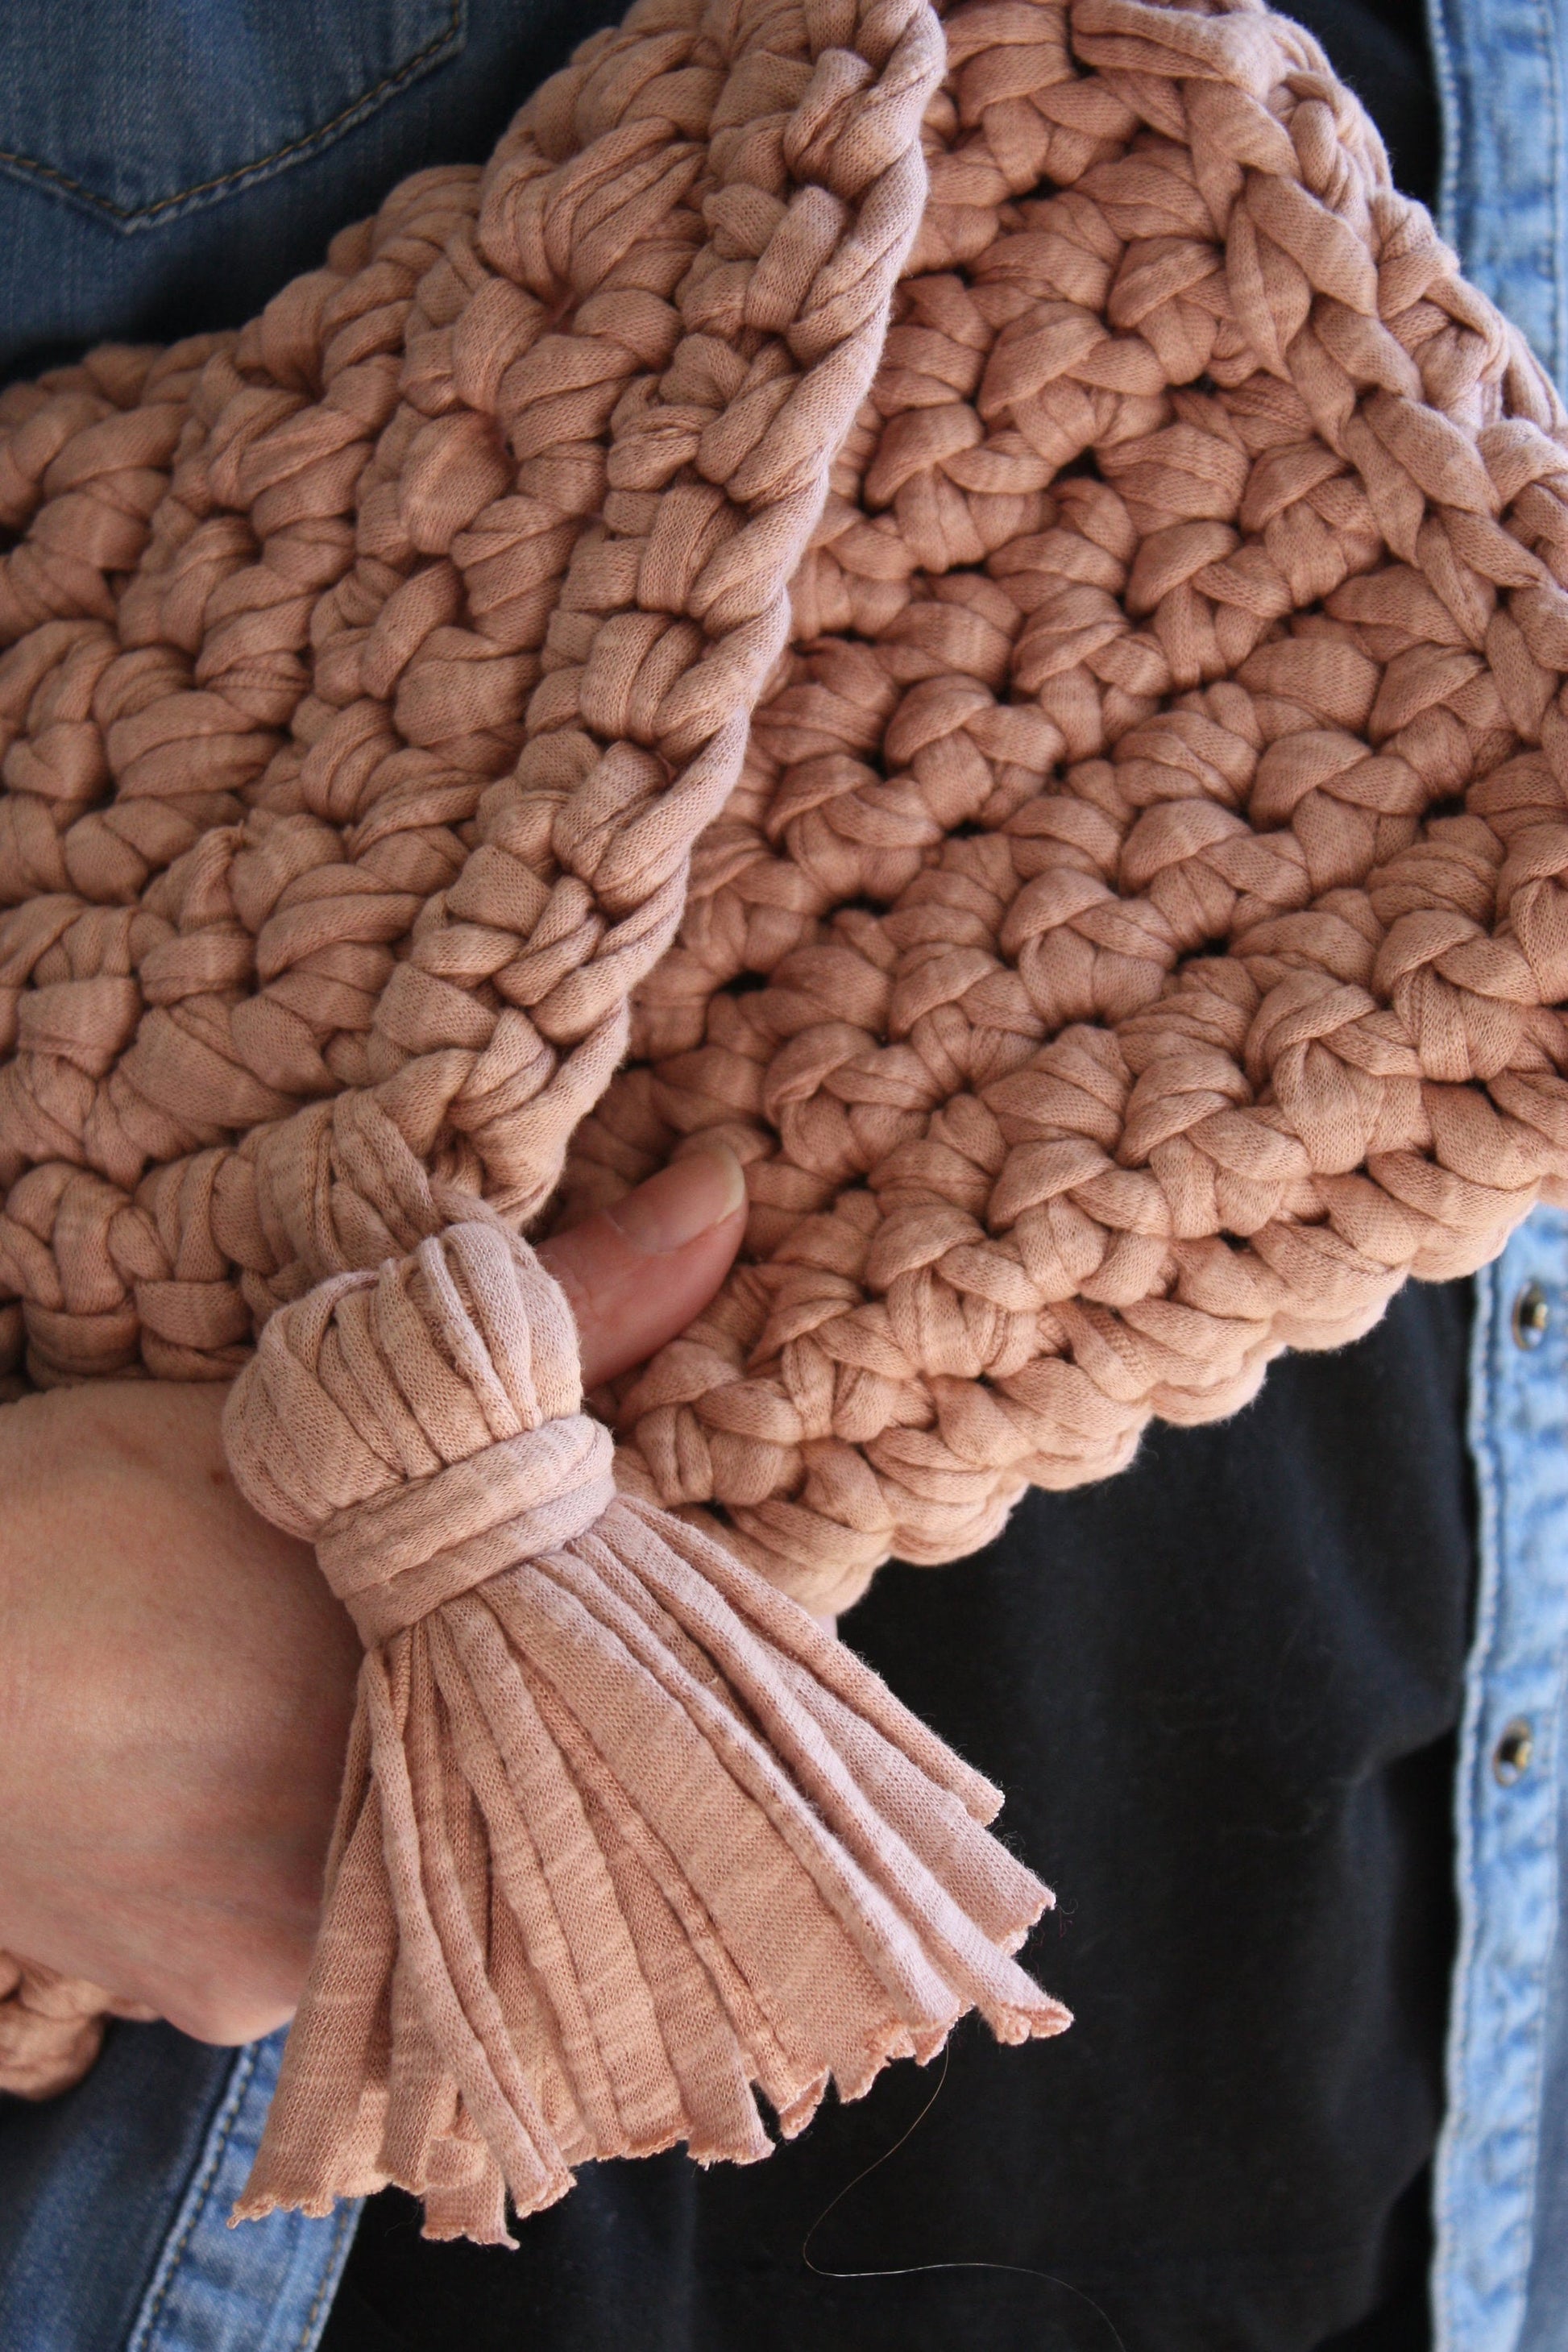 Crocheted Yarn Bag